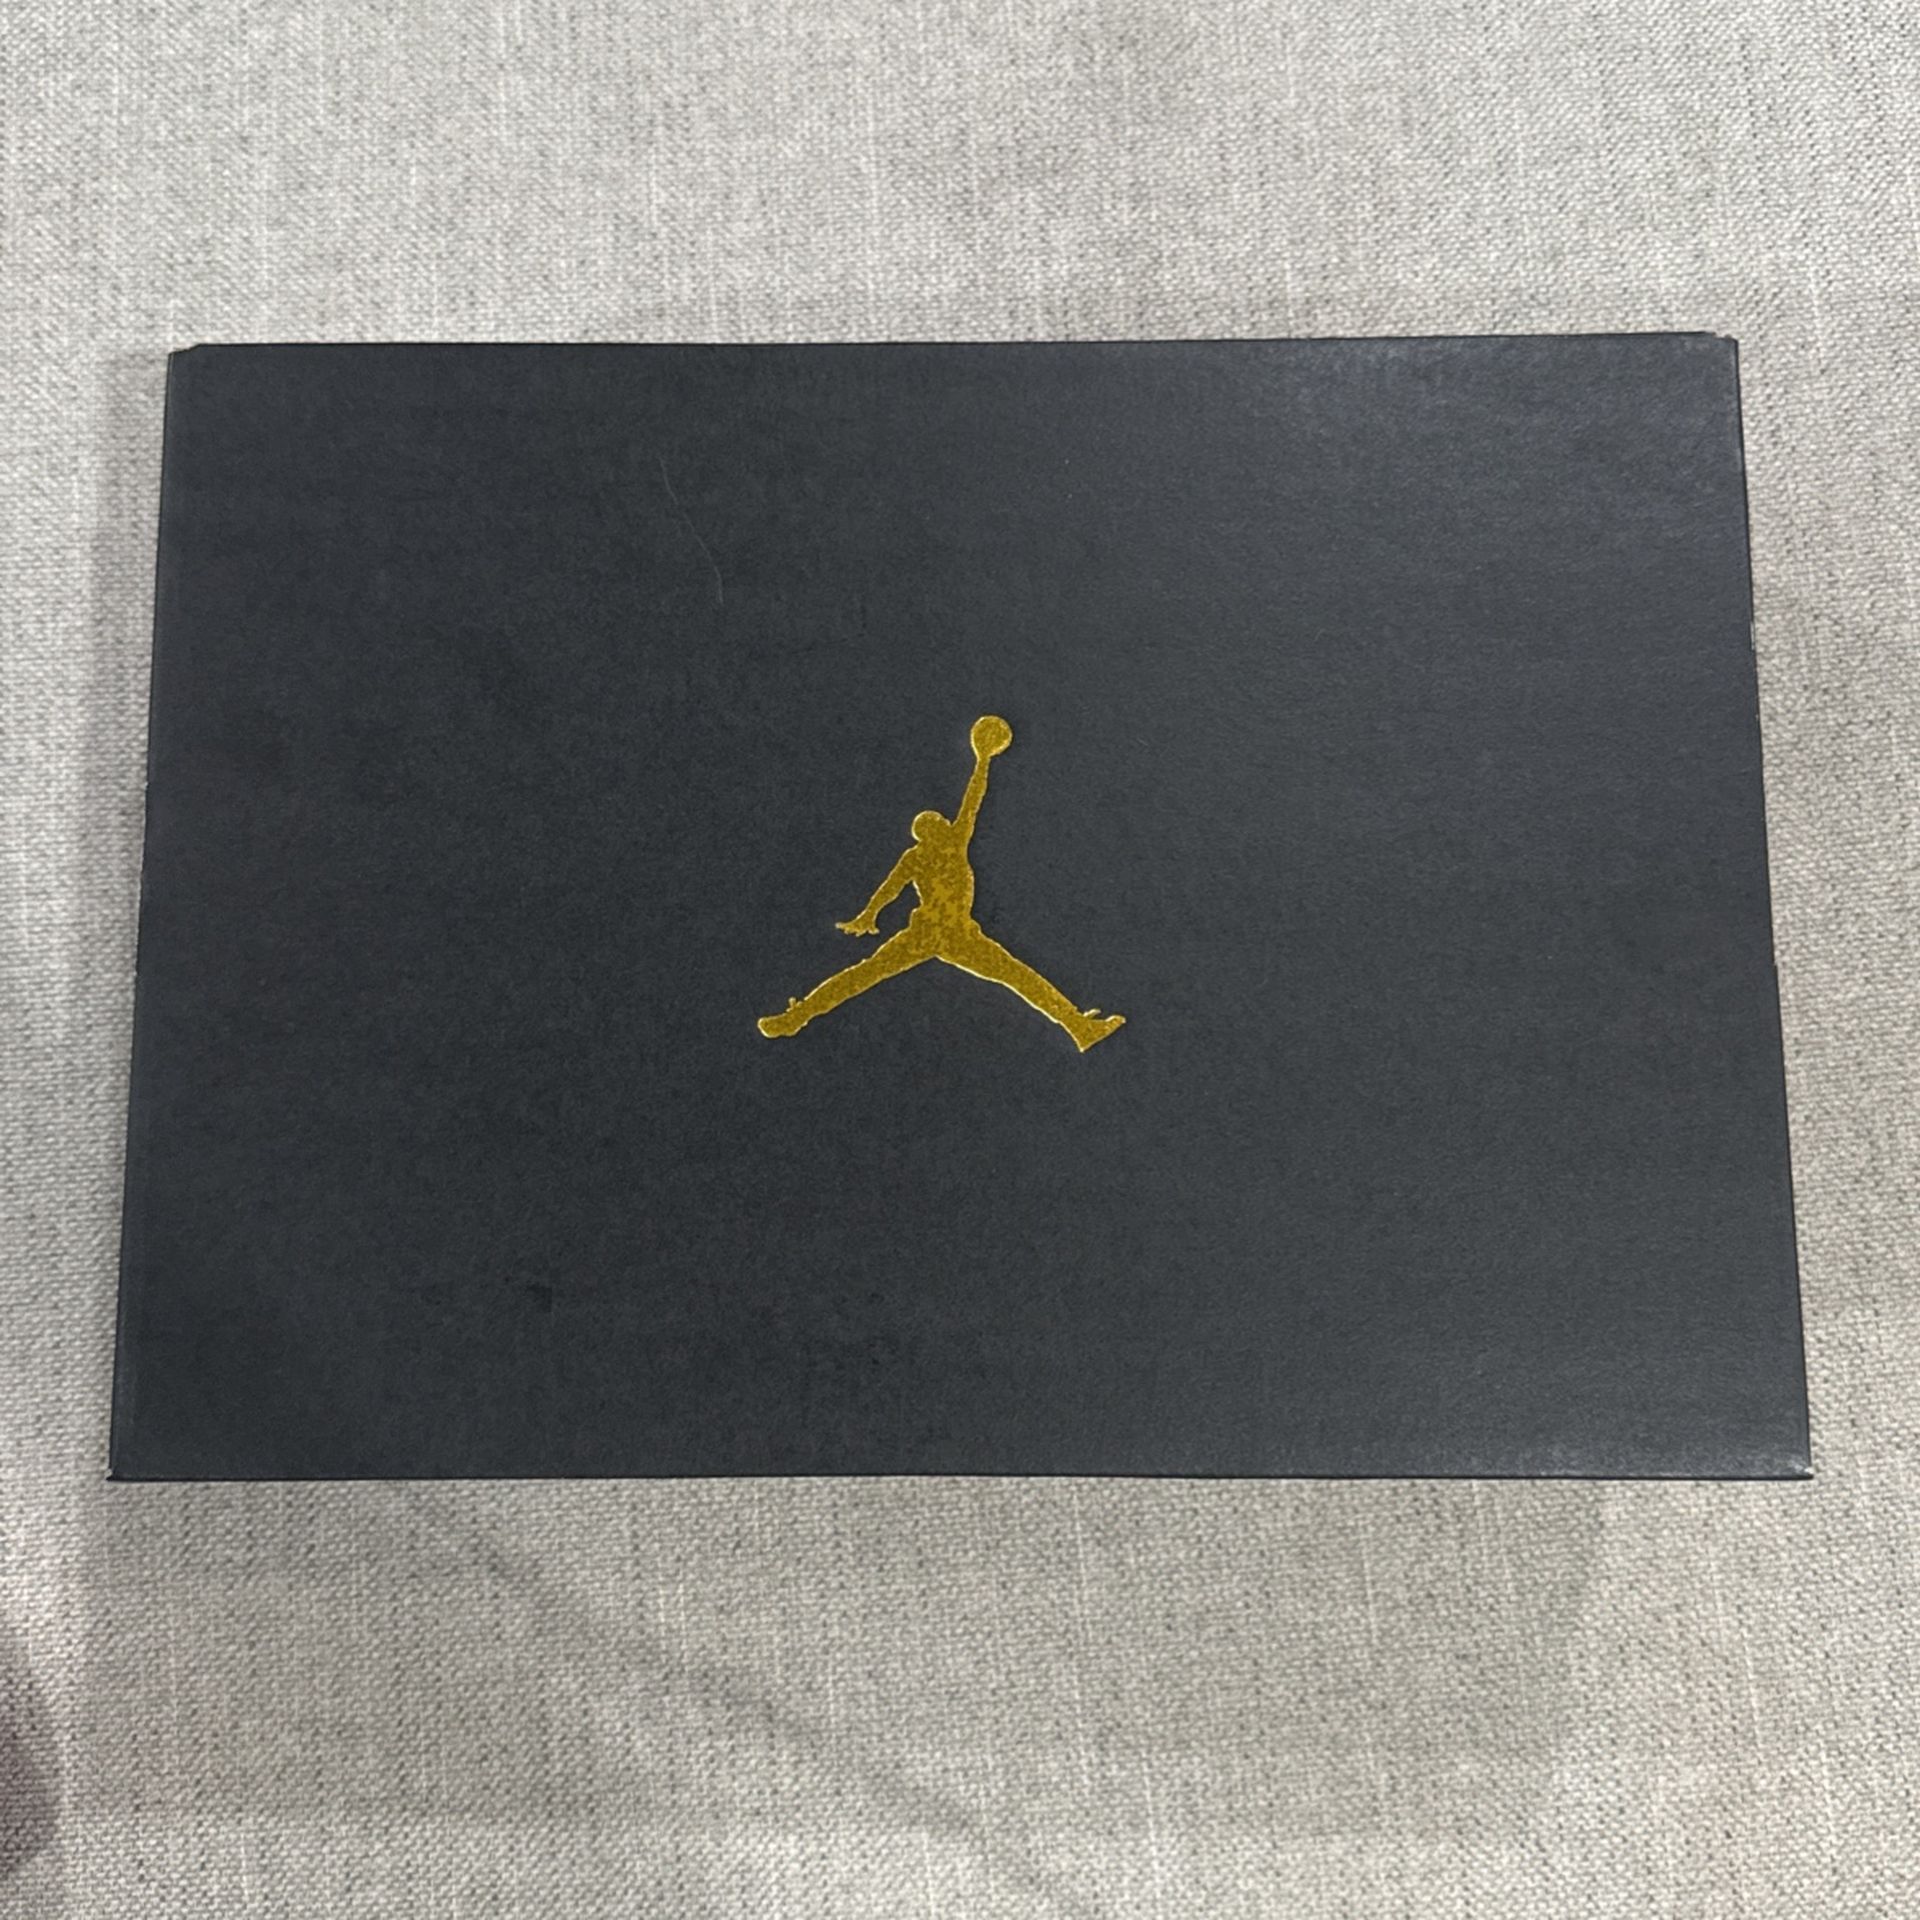 Air Jordan 1 Mid Size 10.5